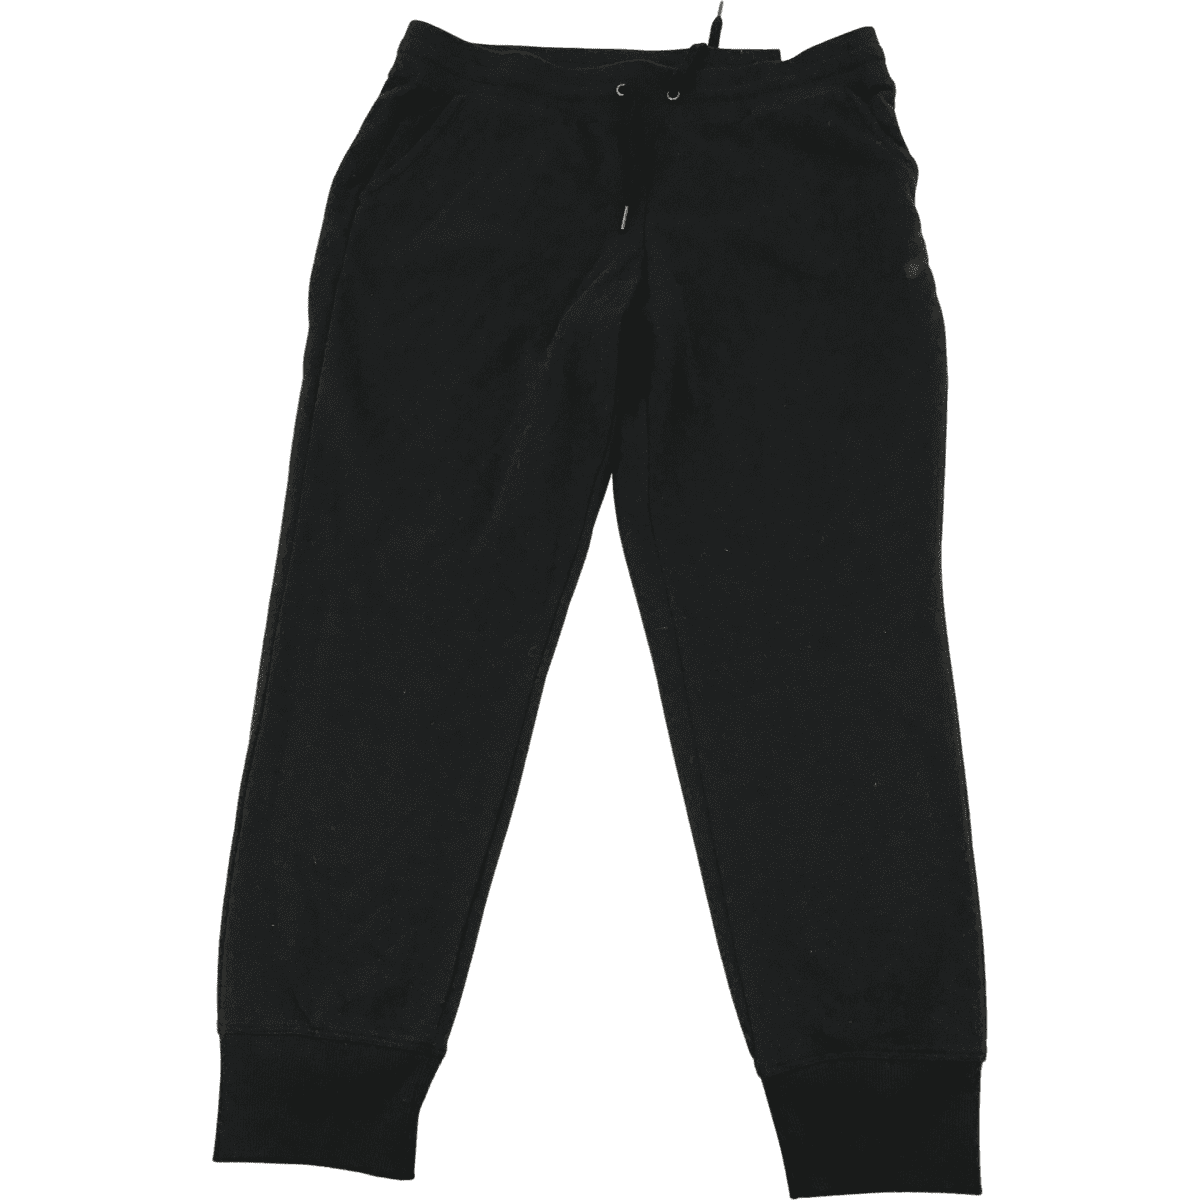 Gaiam Women’s Black Sweatpants / Various Sizes